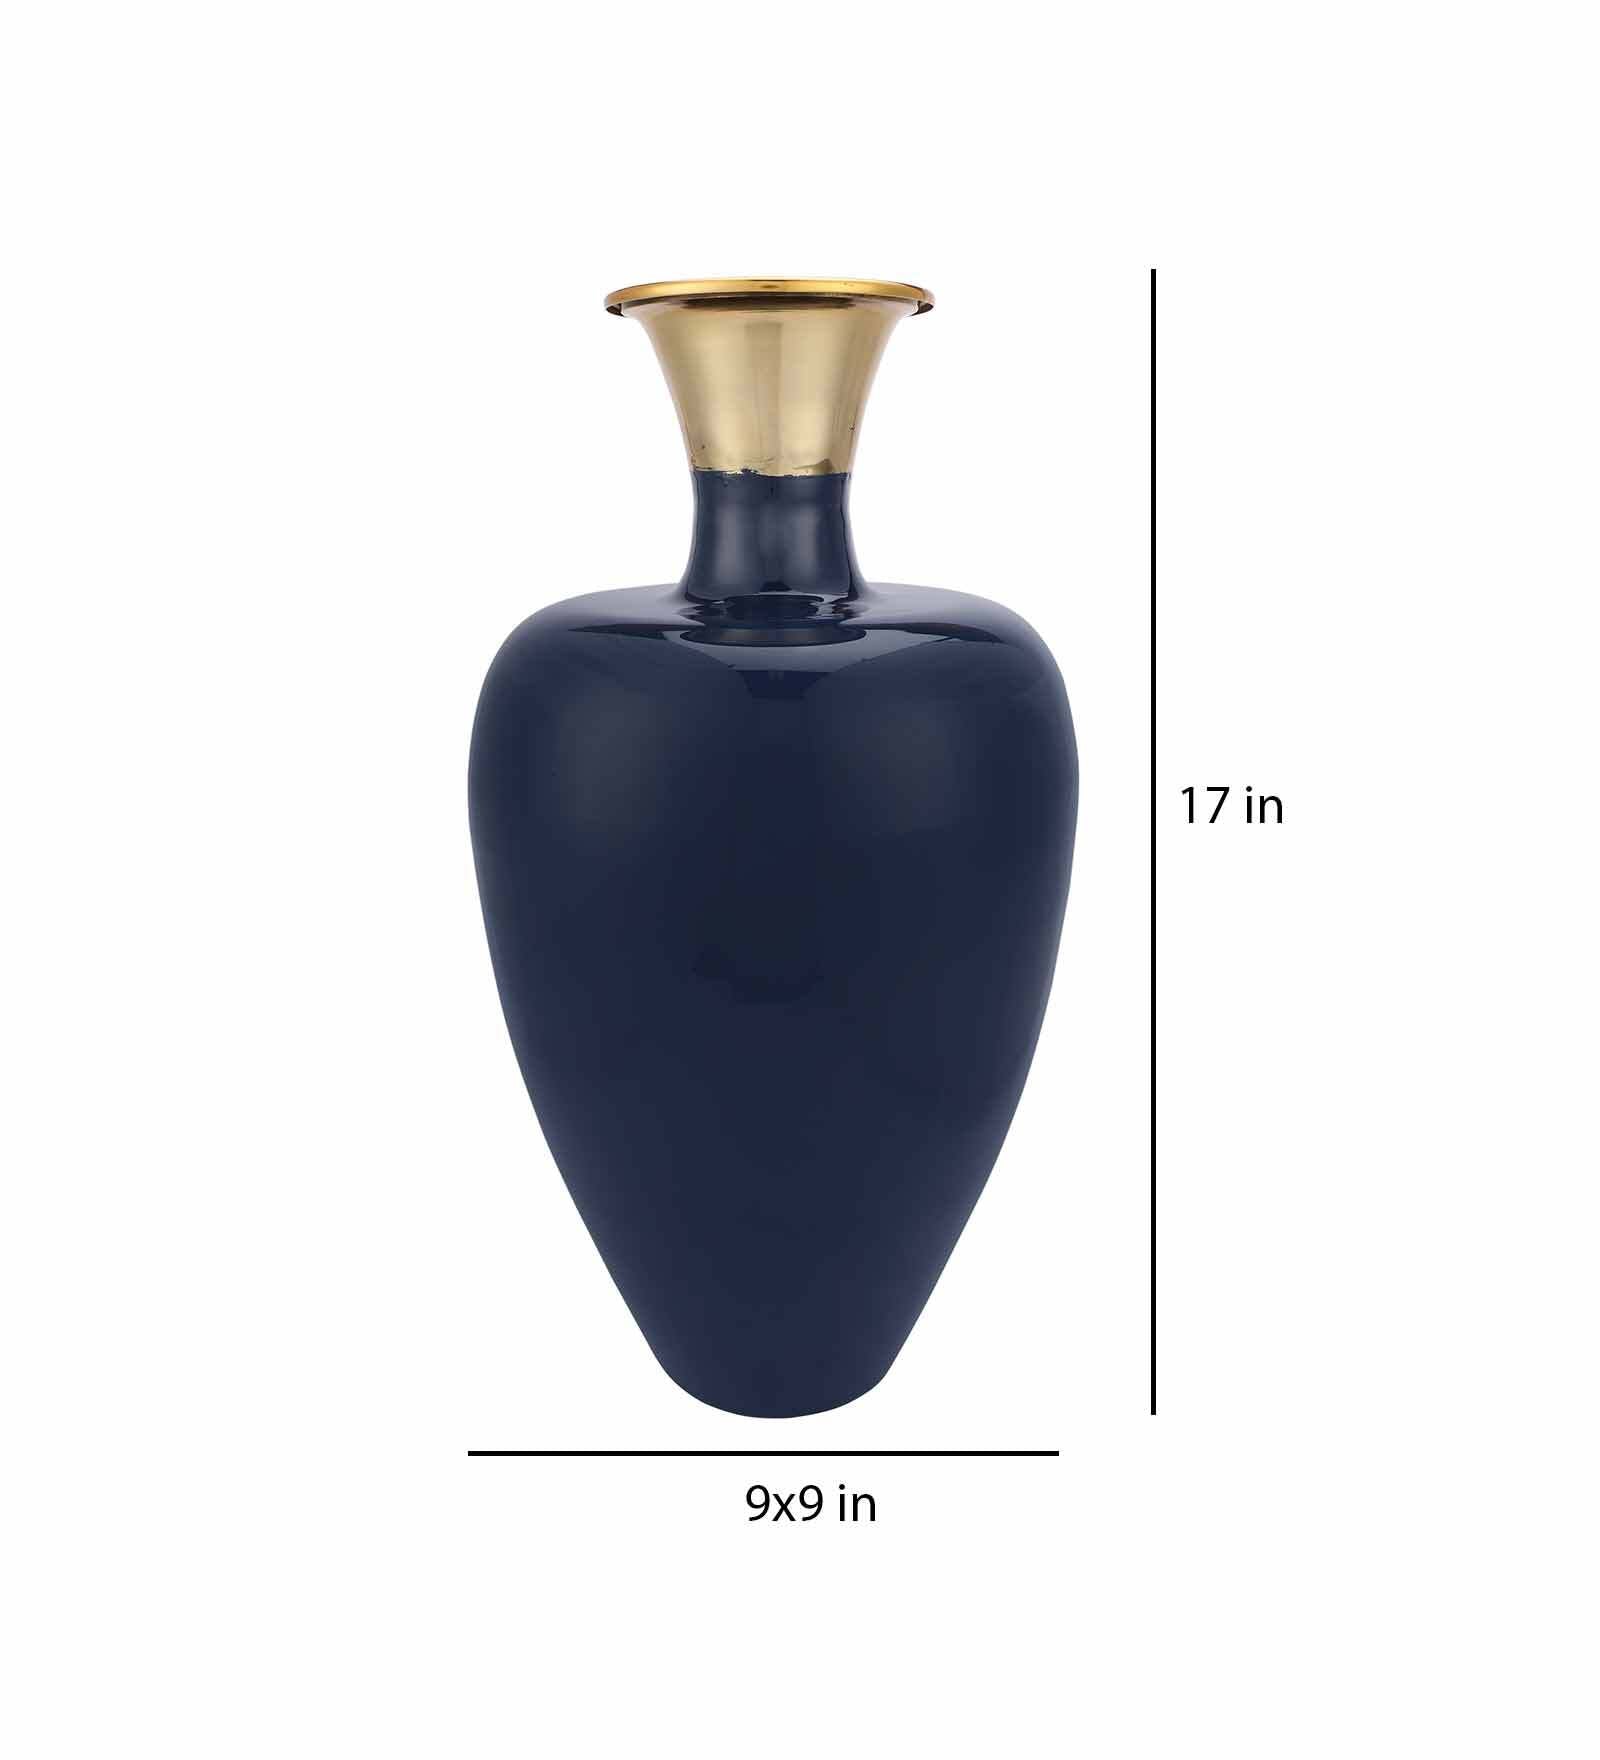 Urn Deidra Teal Blue Metal & Brass Vase Finger Painted Enamel,